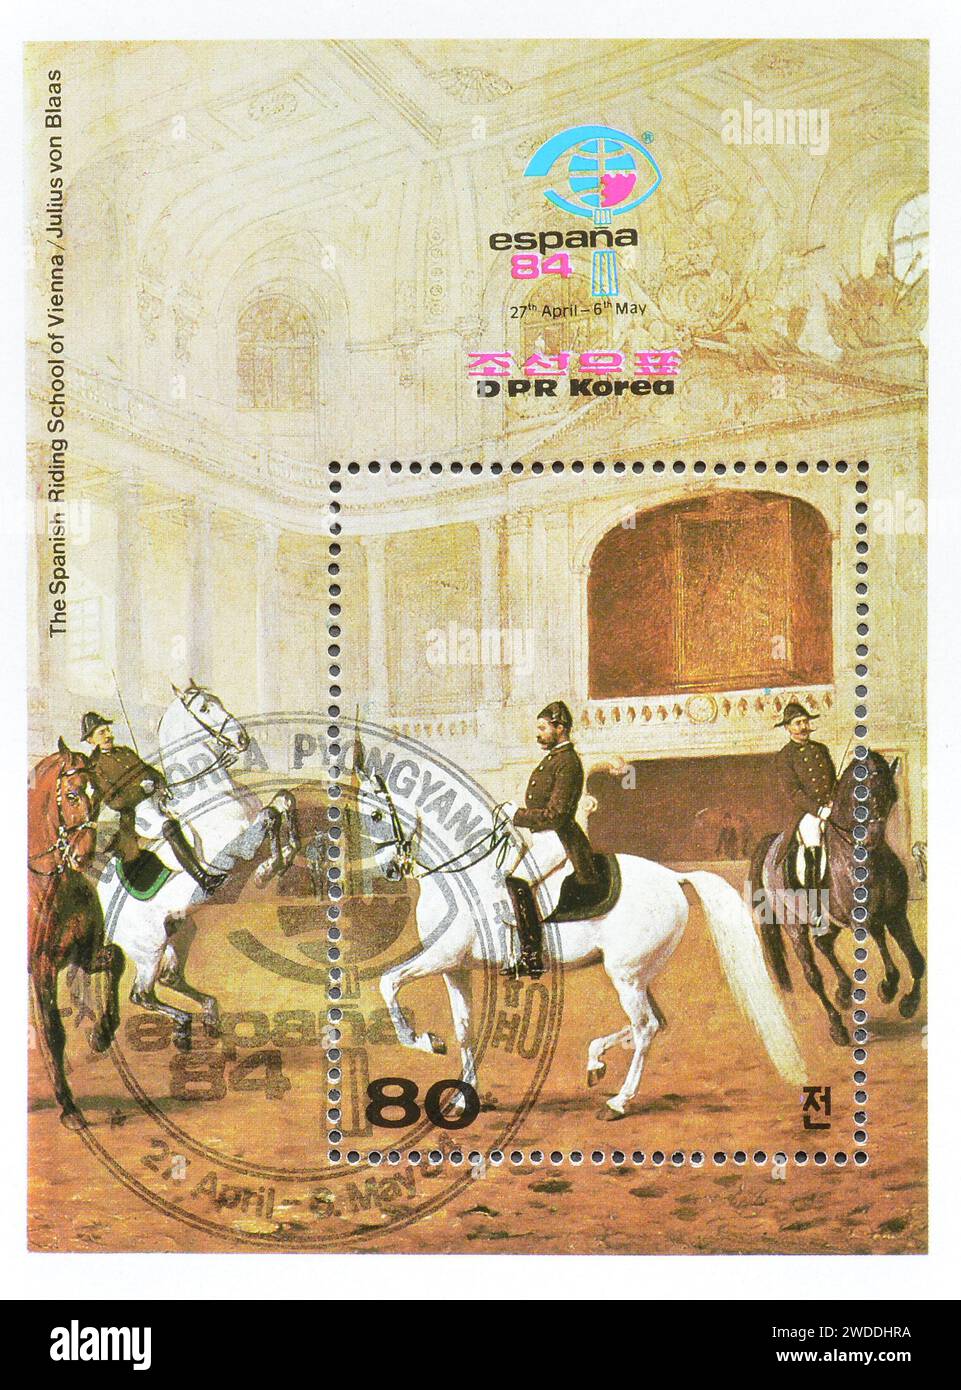 Souvenir Sheet printed by North Korea, that shows Spanish Riding School of Vienna, promoting International Stamp Exhibition 'Espana '84' Stock Photo